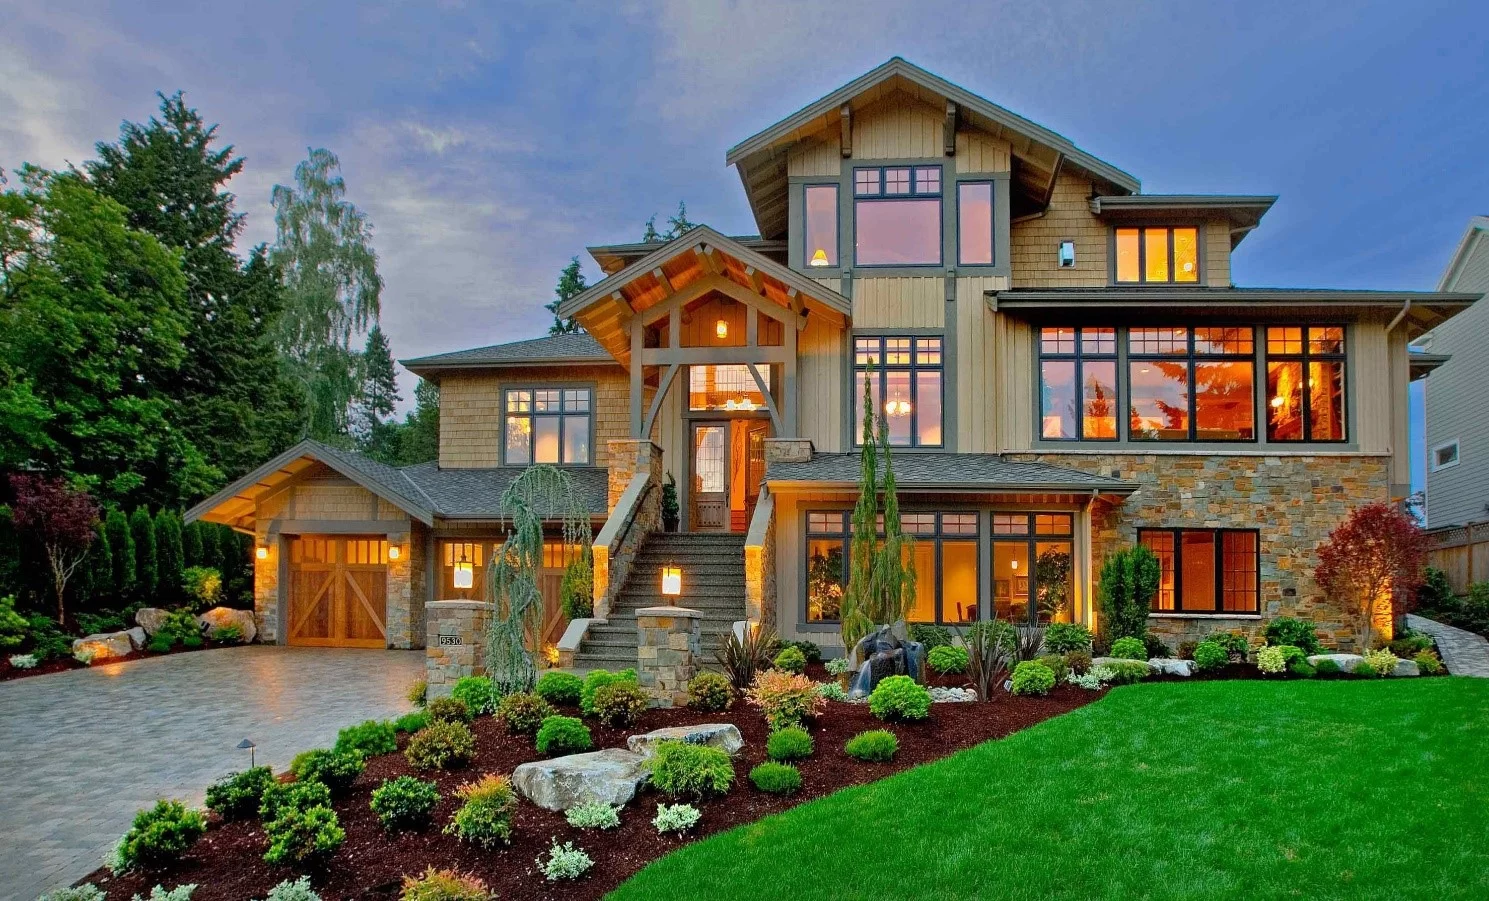 image - Vancouver Custom Home Design Company and Home Building Company